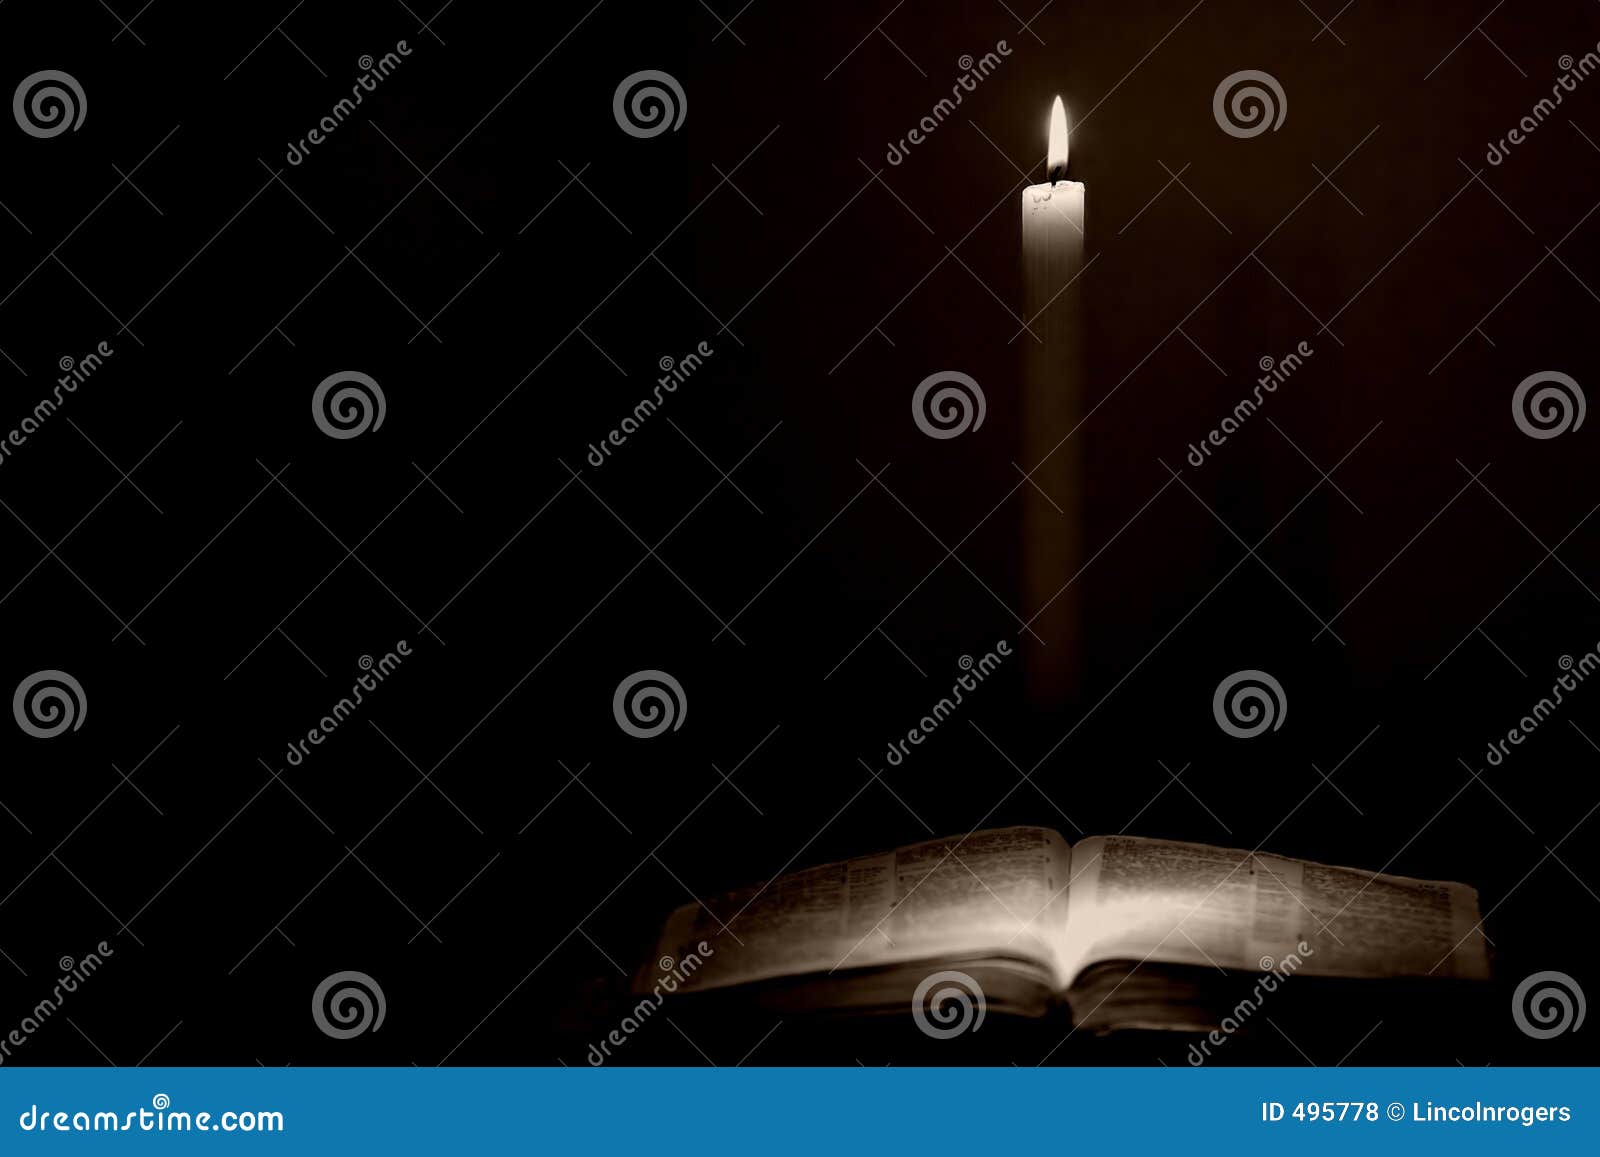 bible & candle